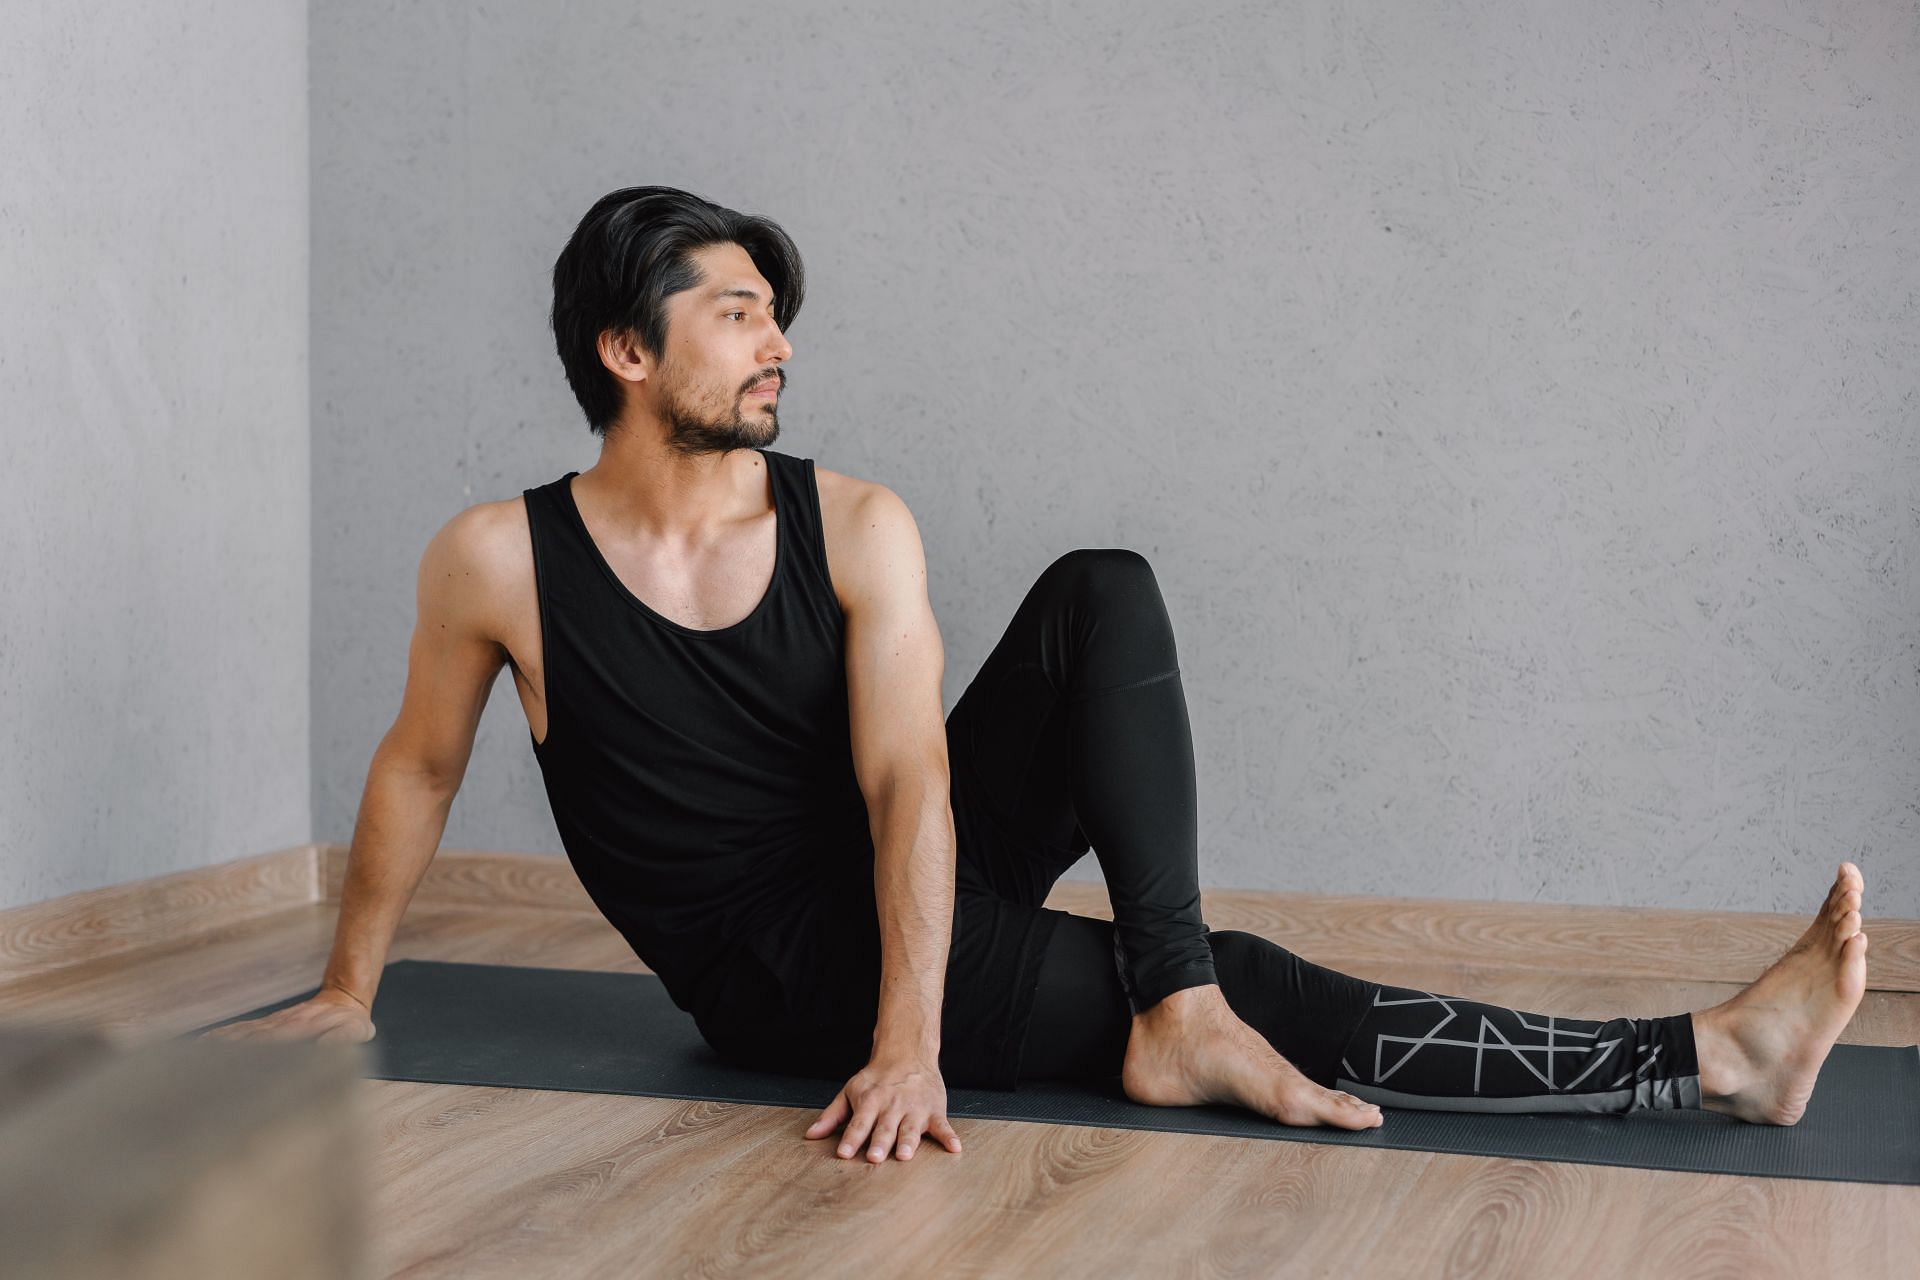 Nowadays, comfy yoga pants for men are available (Image via Pexels @Mikhail Nilov)